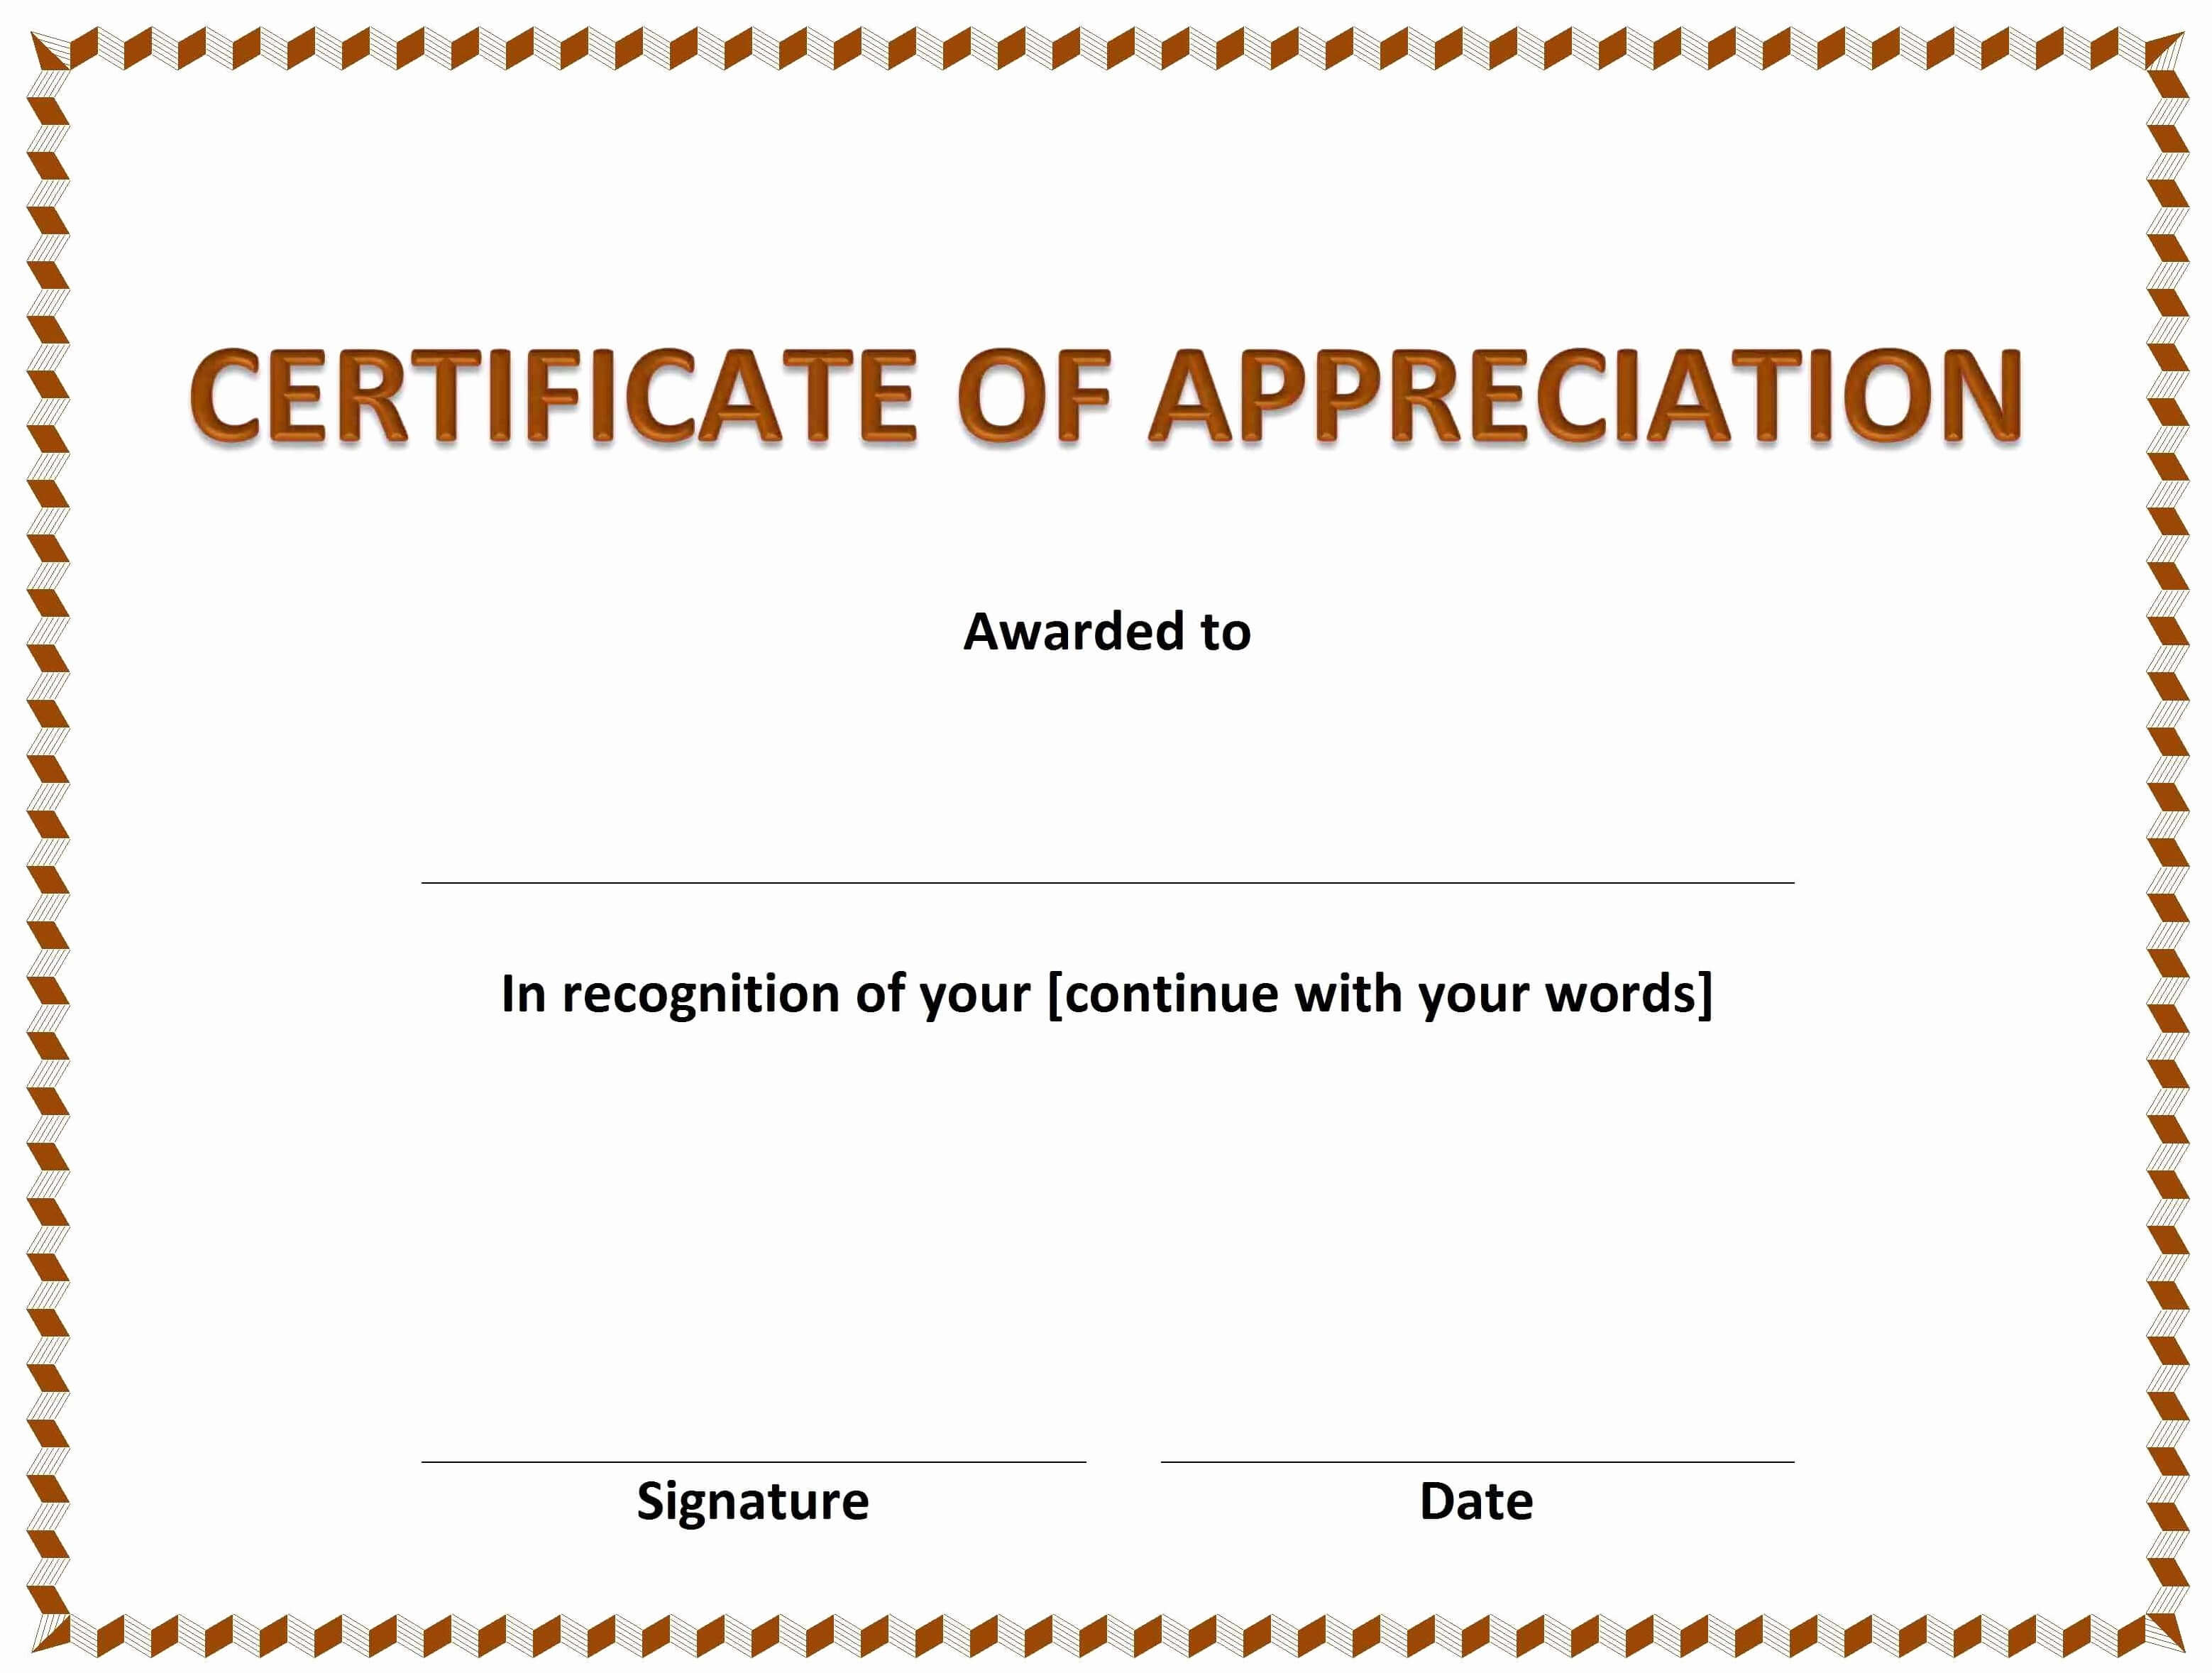 013 Certificates Of Appreciation Templates Printable With Regard To Certificates Of Appreciation Template